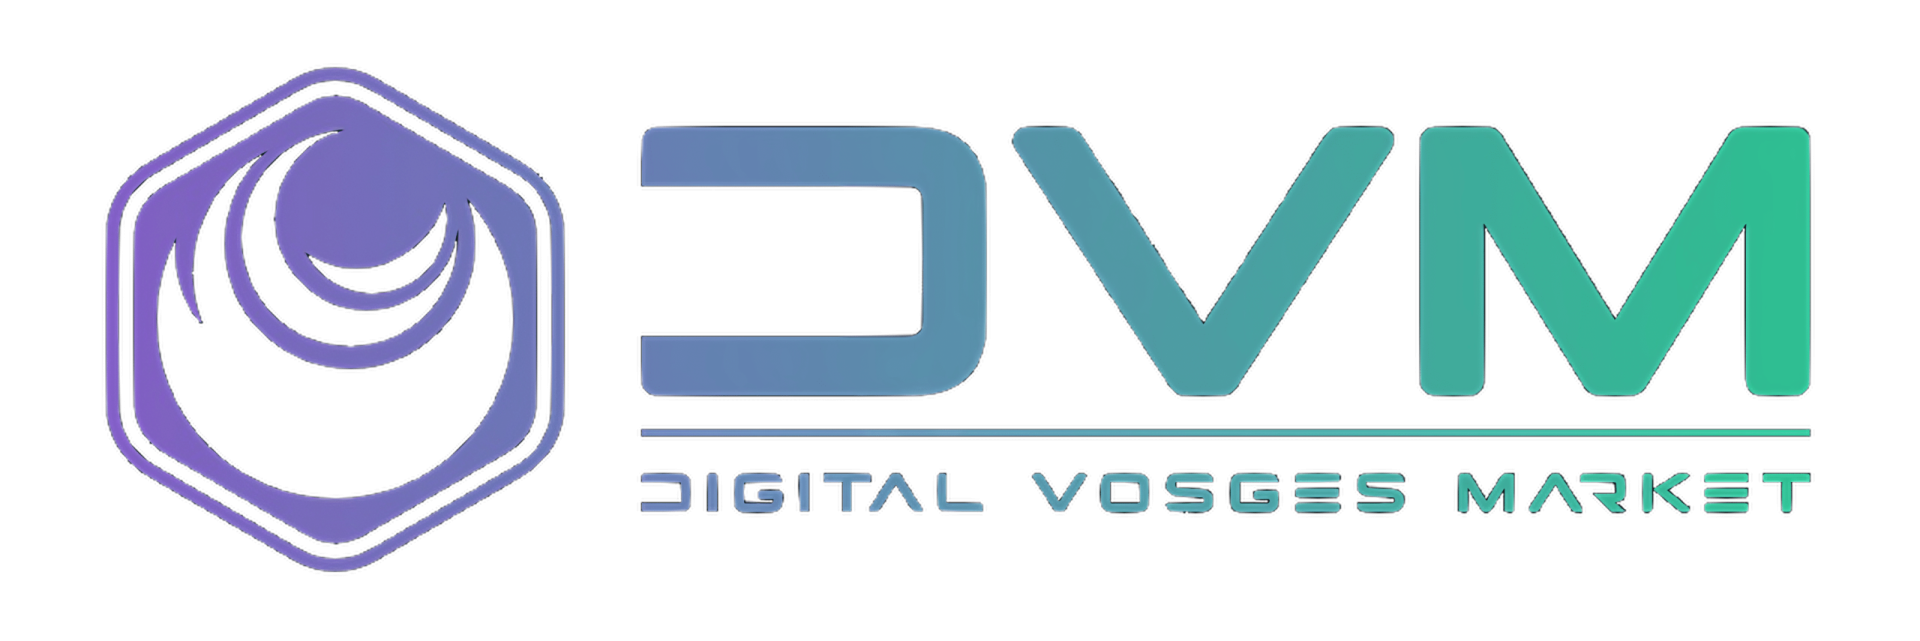 logo 2 digital vosges market